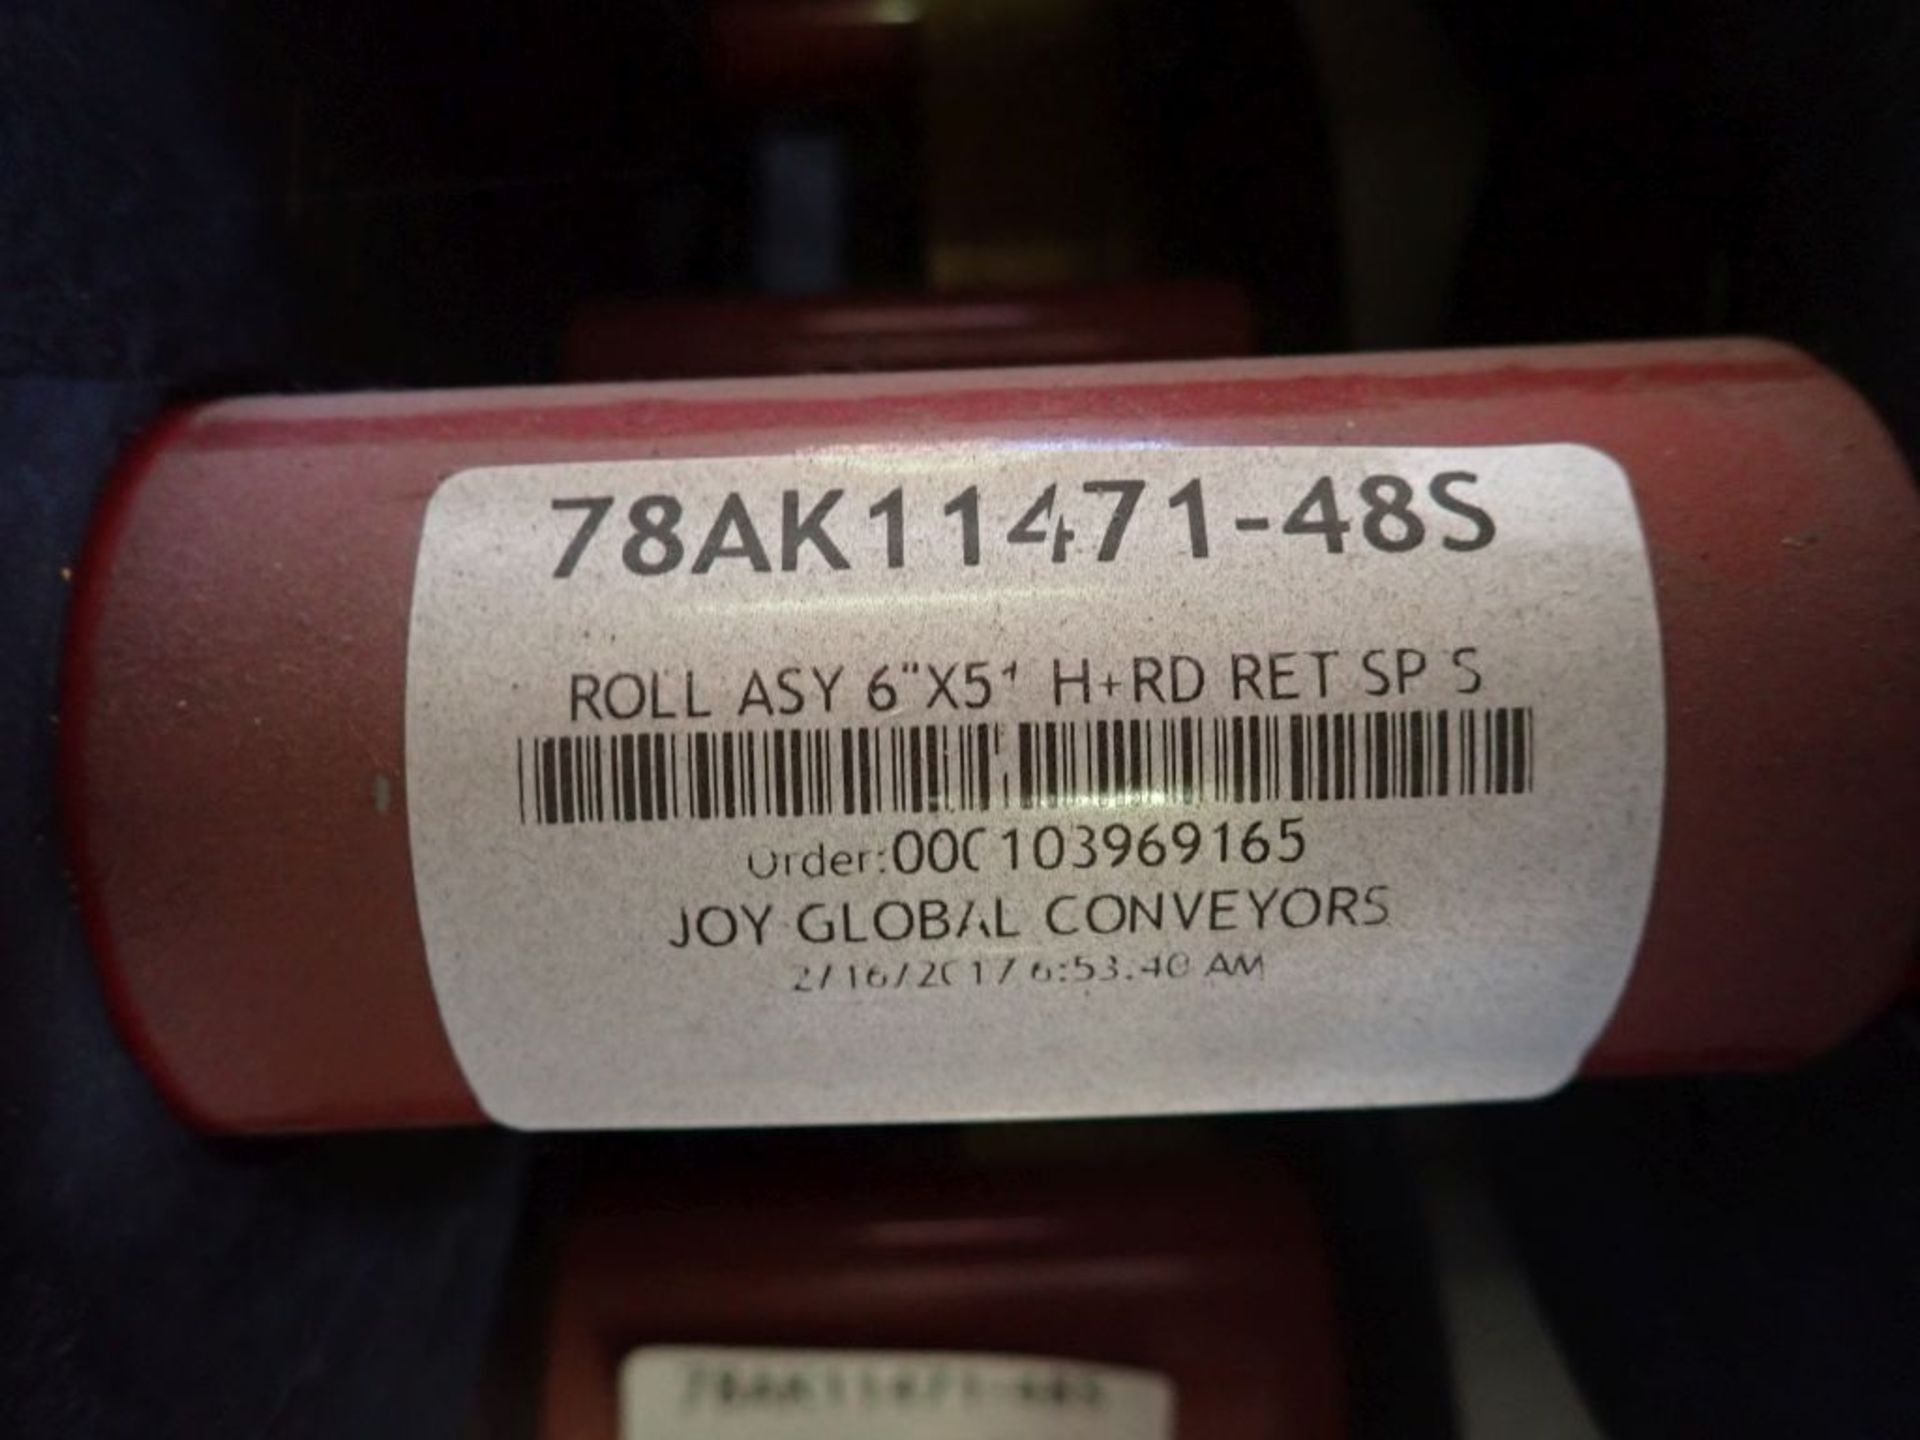 Lot of (25) Joy Global Conveyors Inc Assembly Rolls | Model No. 78AK11471.48S; 6" x 51H+RD RET SPS - Image 8 of 10